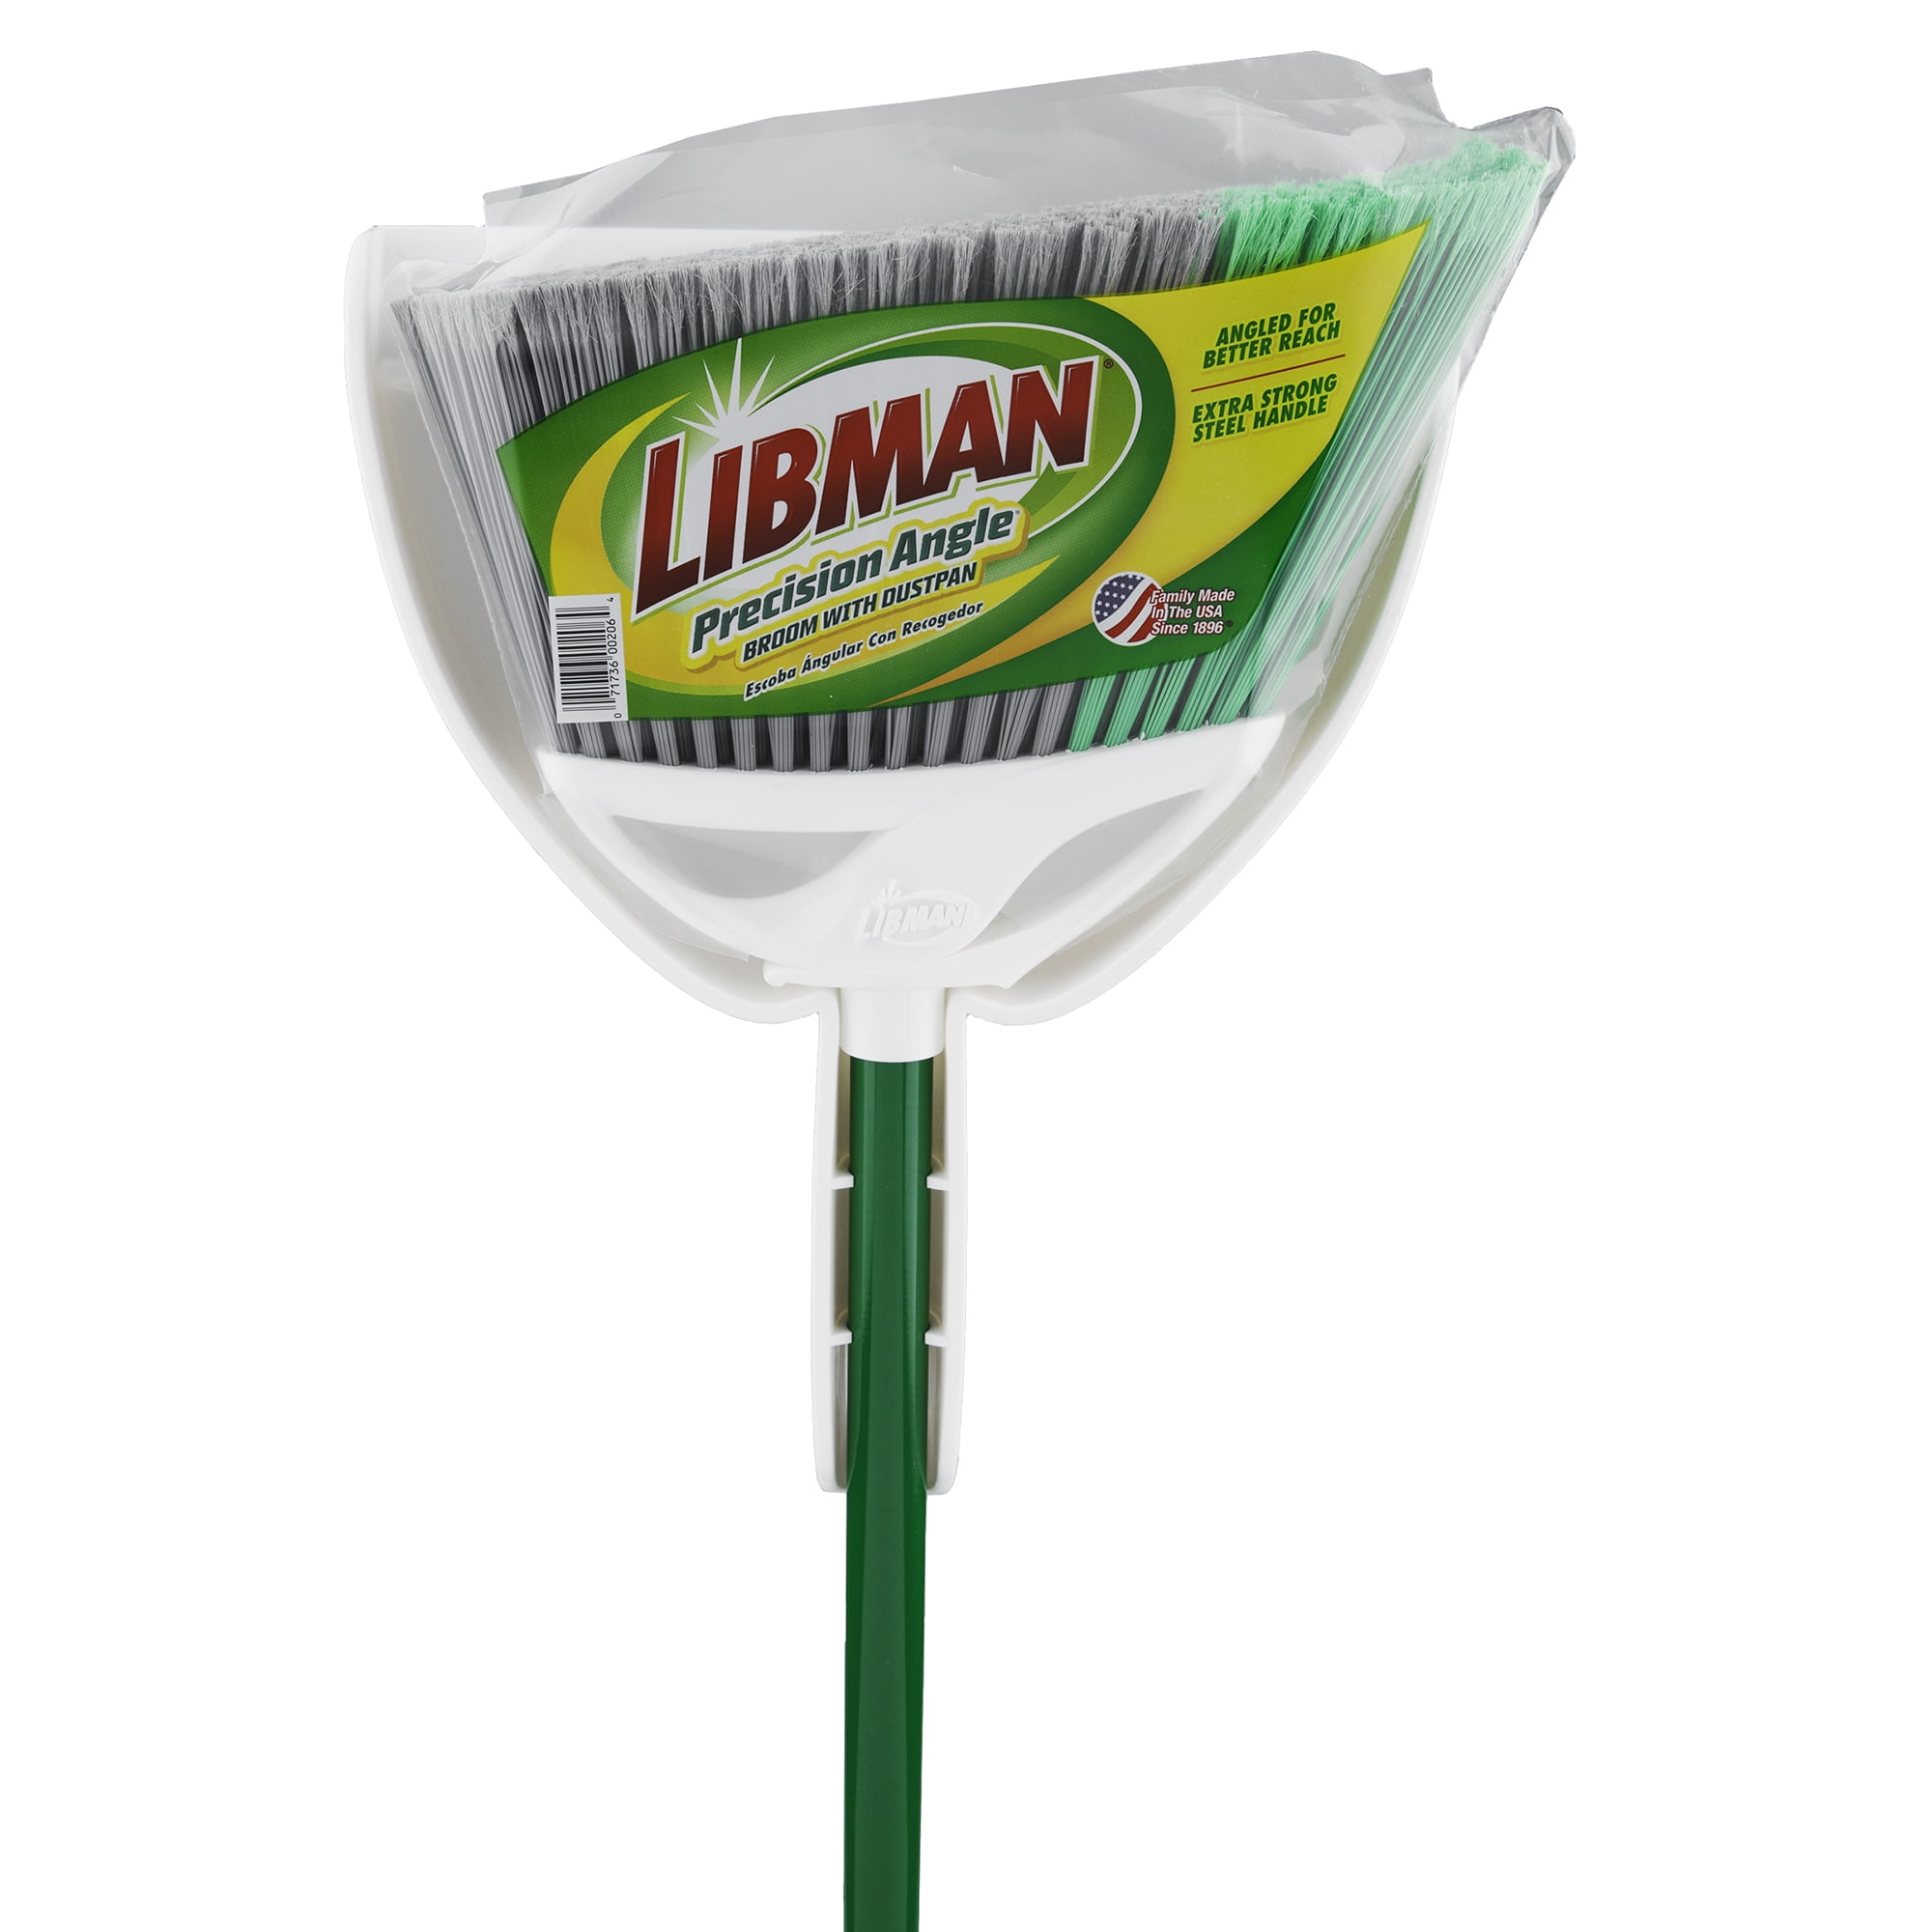 Libman Precision Angle Broom Dustpan Green Electrostatic Powder Coated Steel Handel PET Broom Fibers